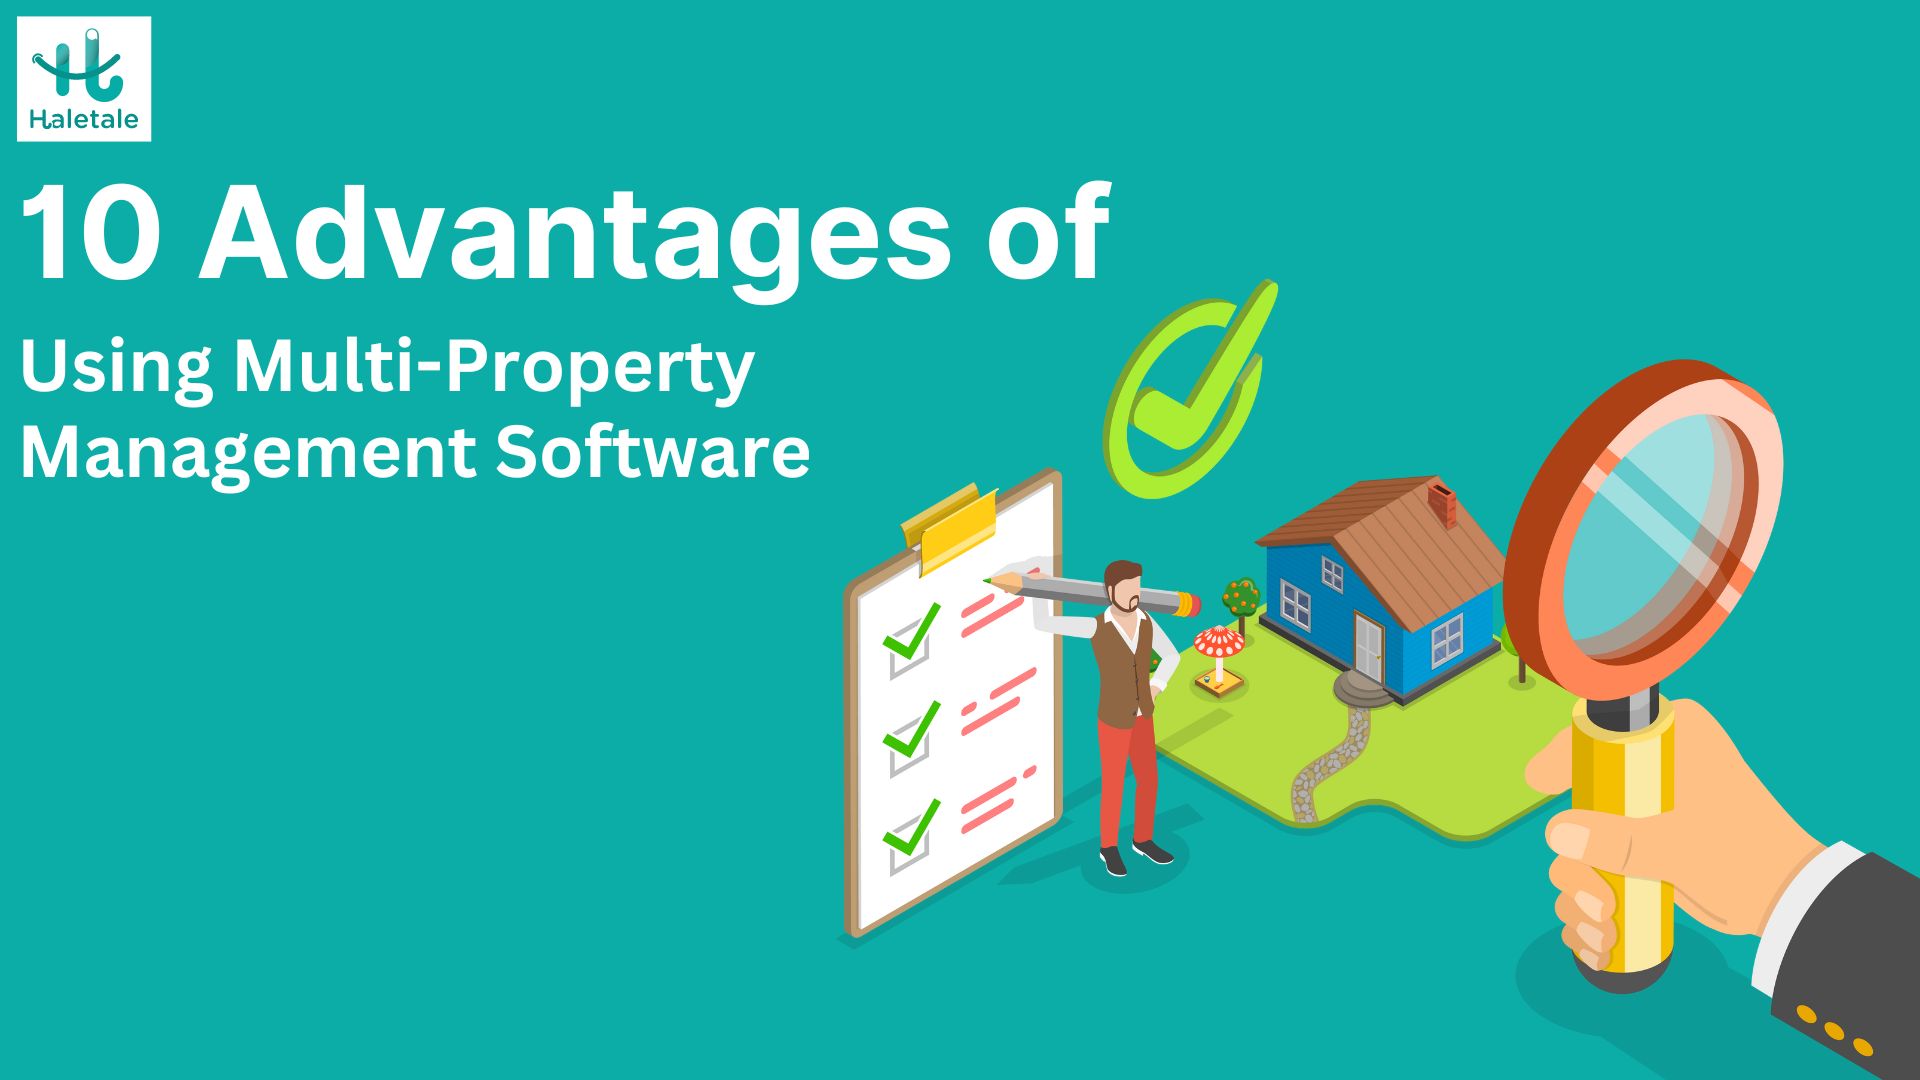 Multi-Property Management Software